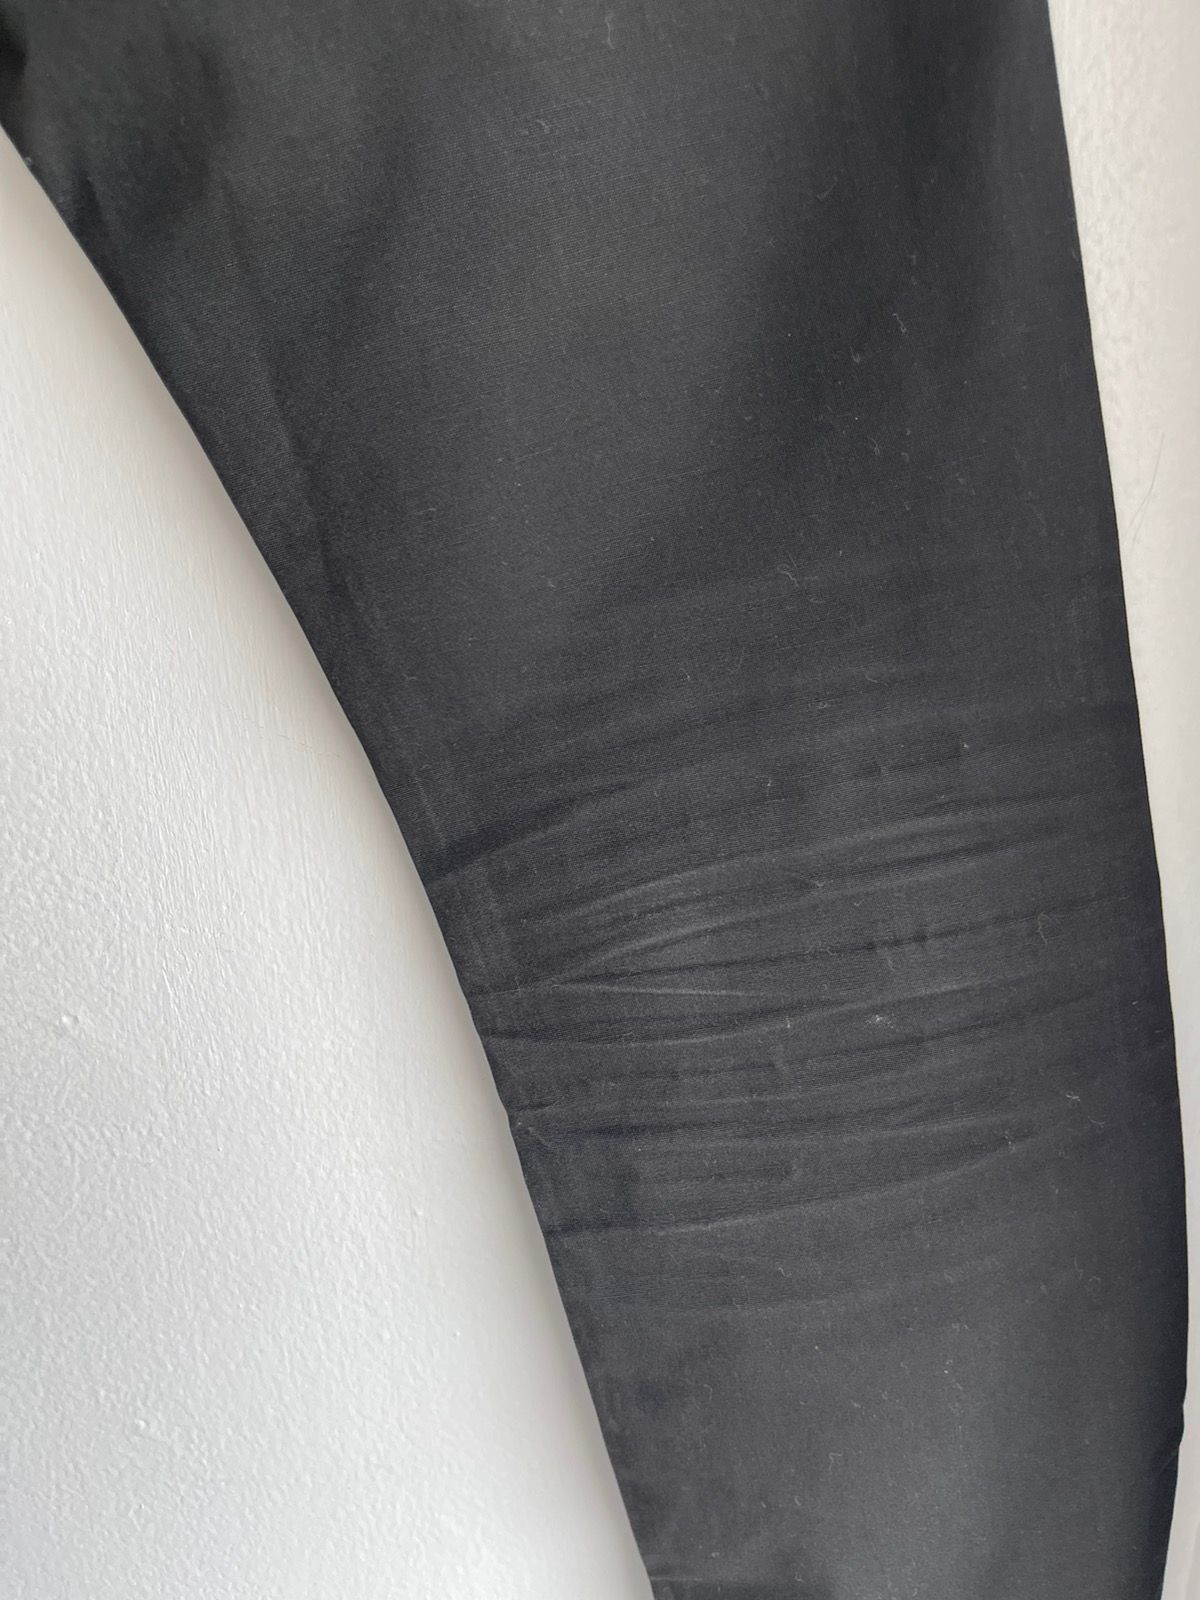 Dior Homme 05 Black Cropped Raw Hem Denim Jeans